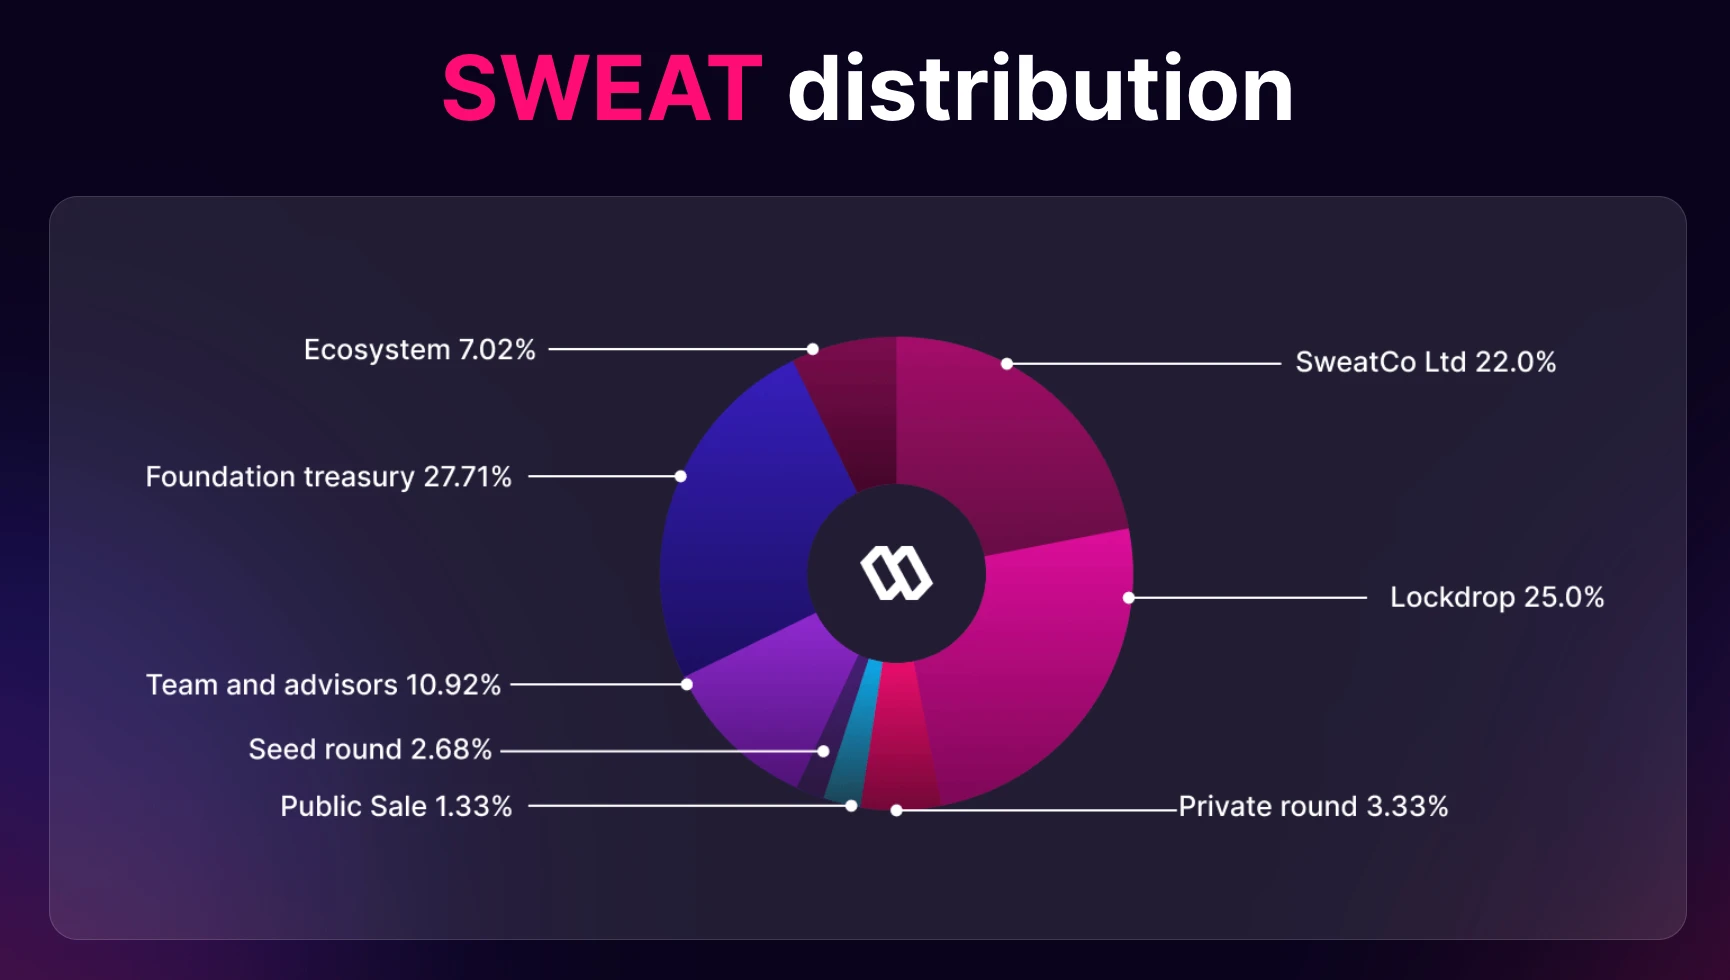 SWEAT distribution pie chart. 